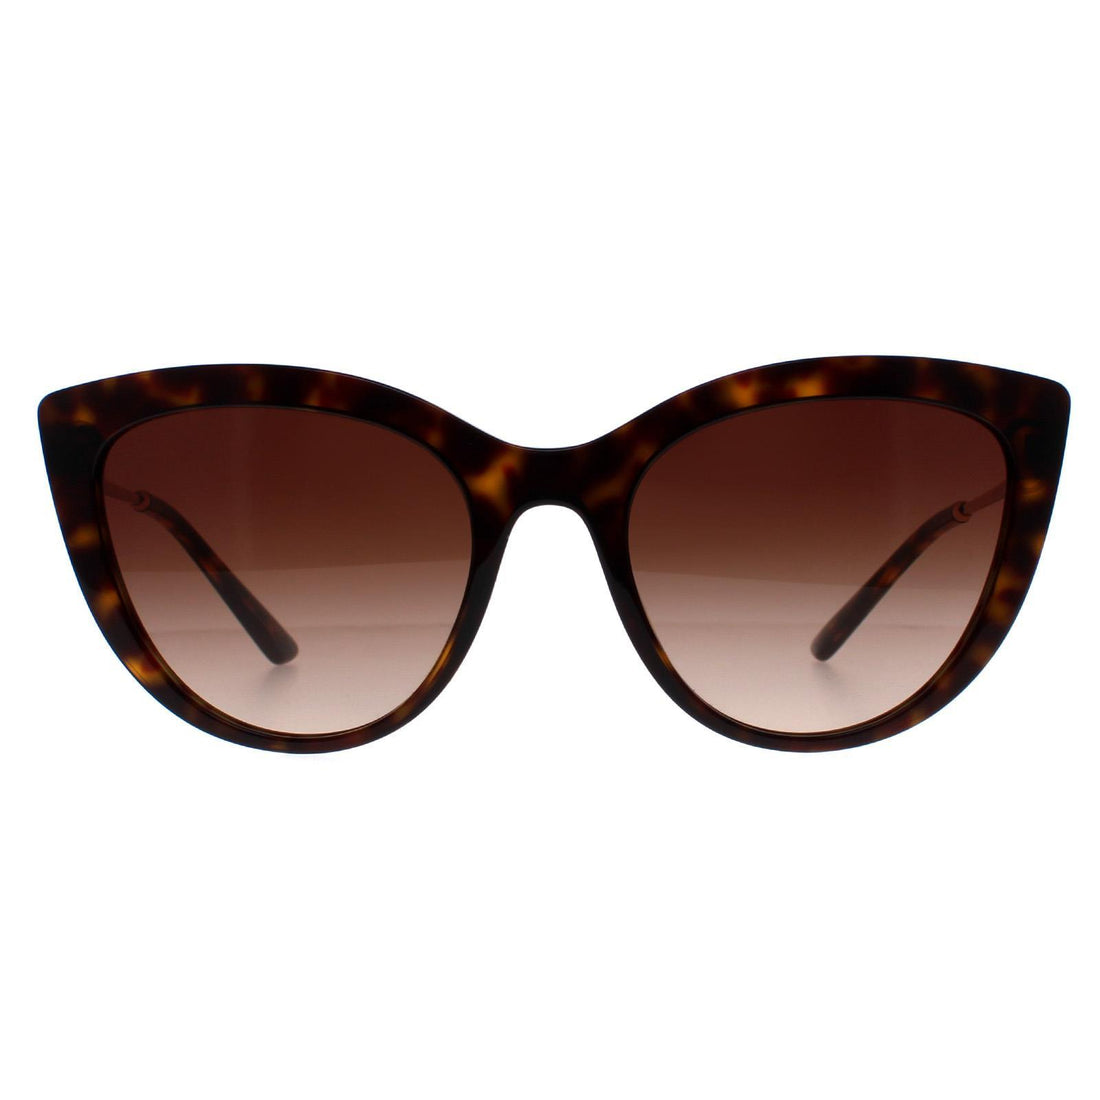 Dolce & Gabbana DG4408 Sunglasses